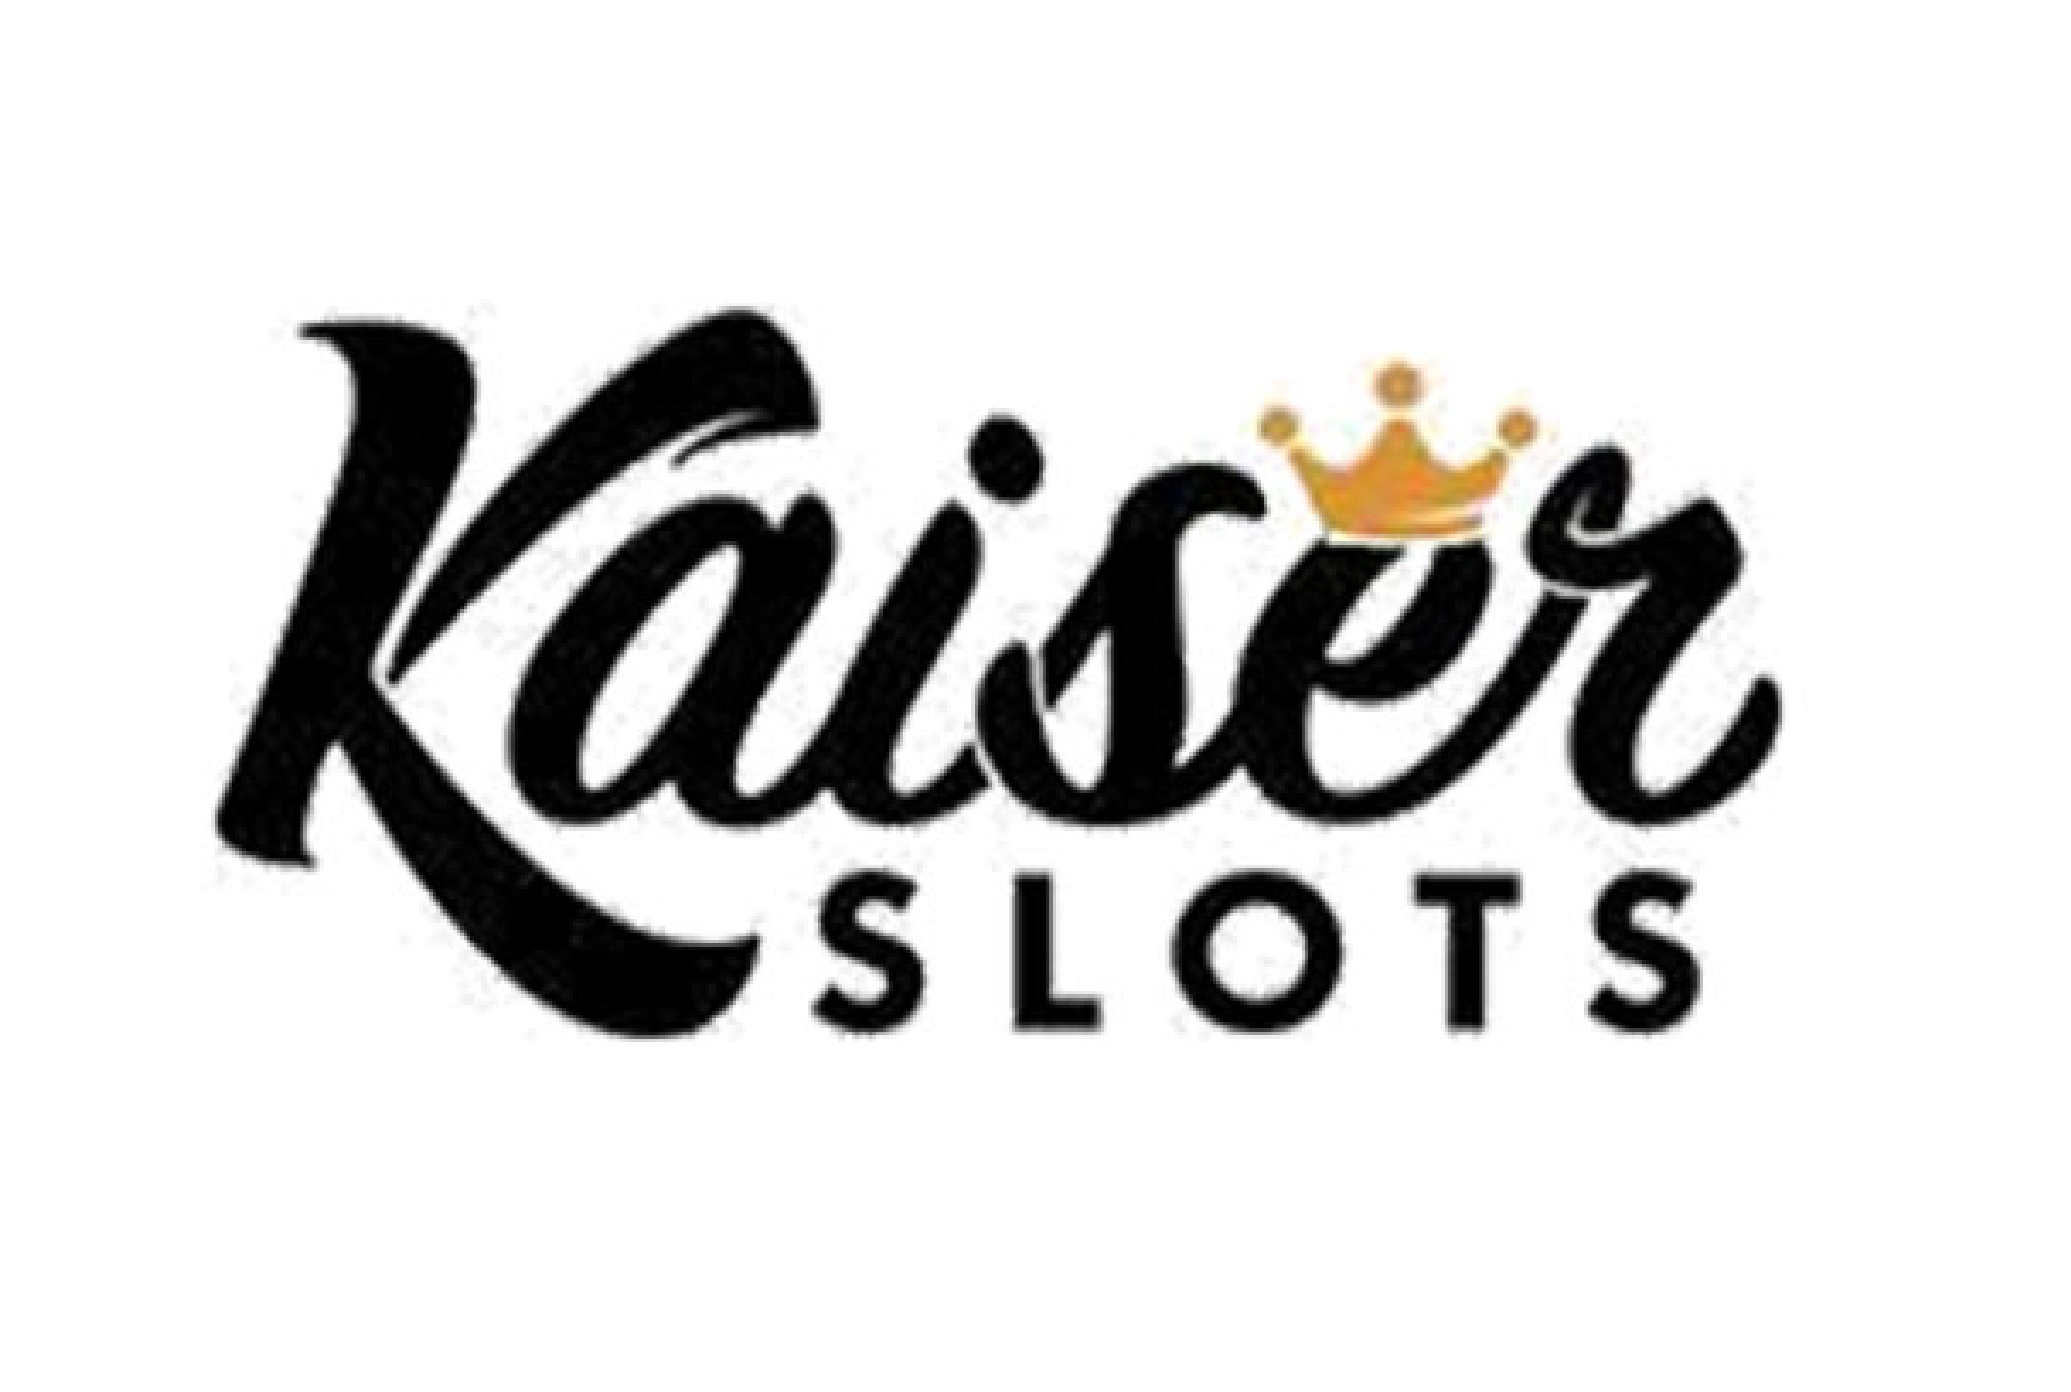 kaiserslots casino logo-01